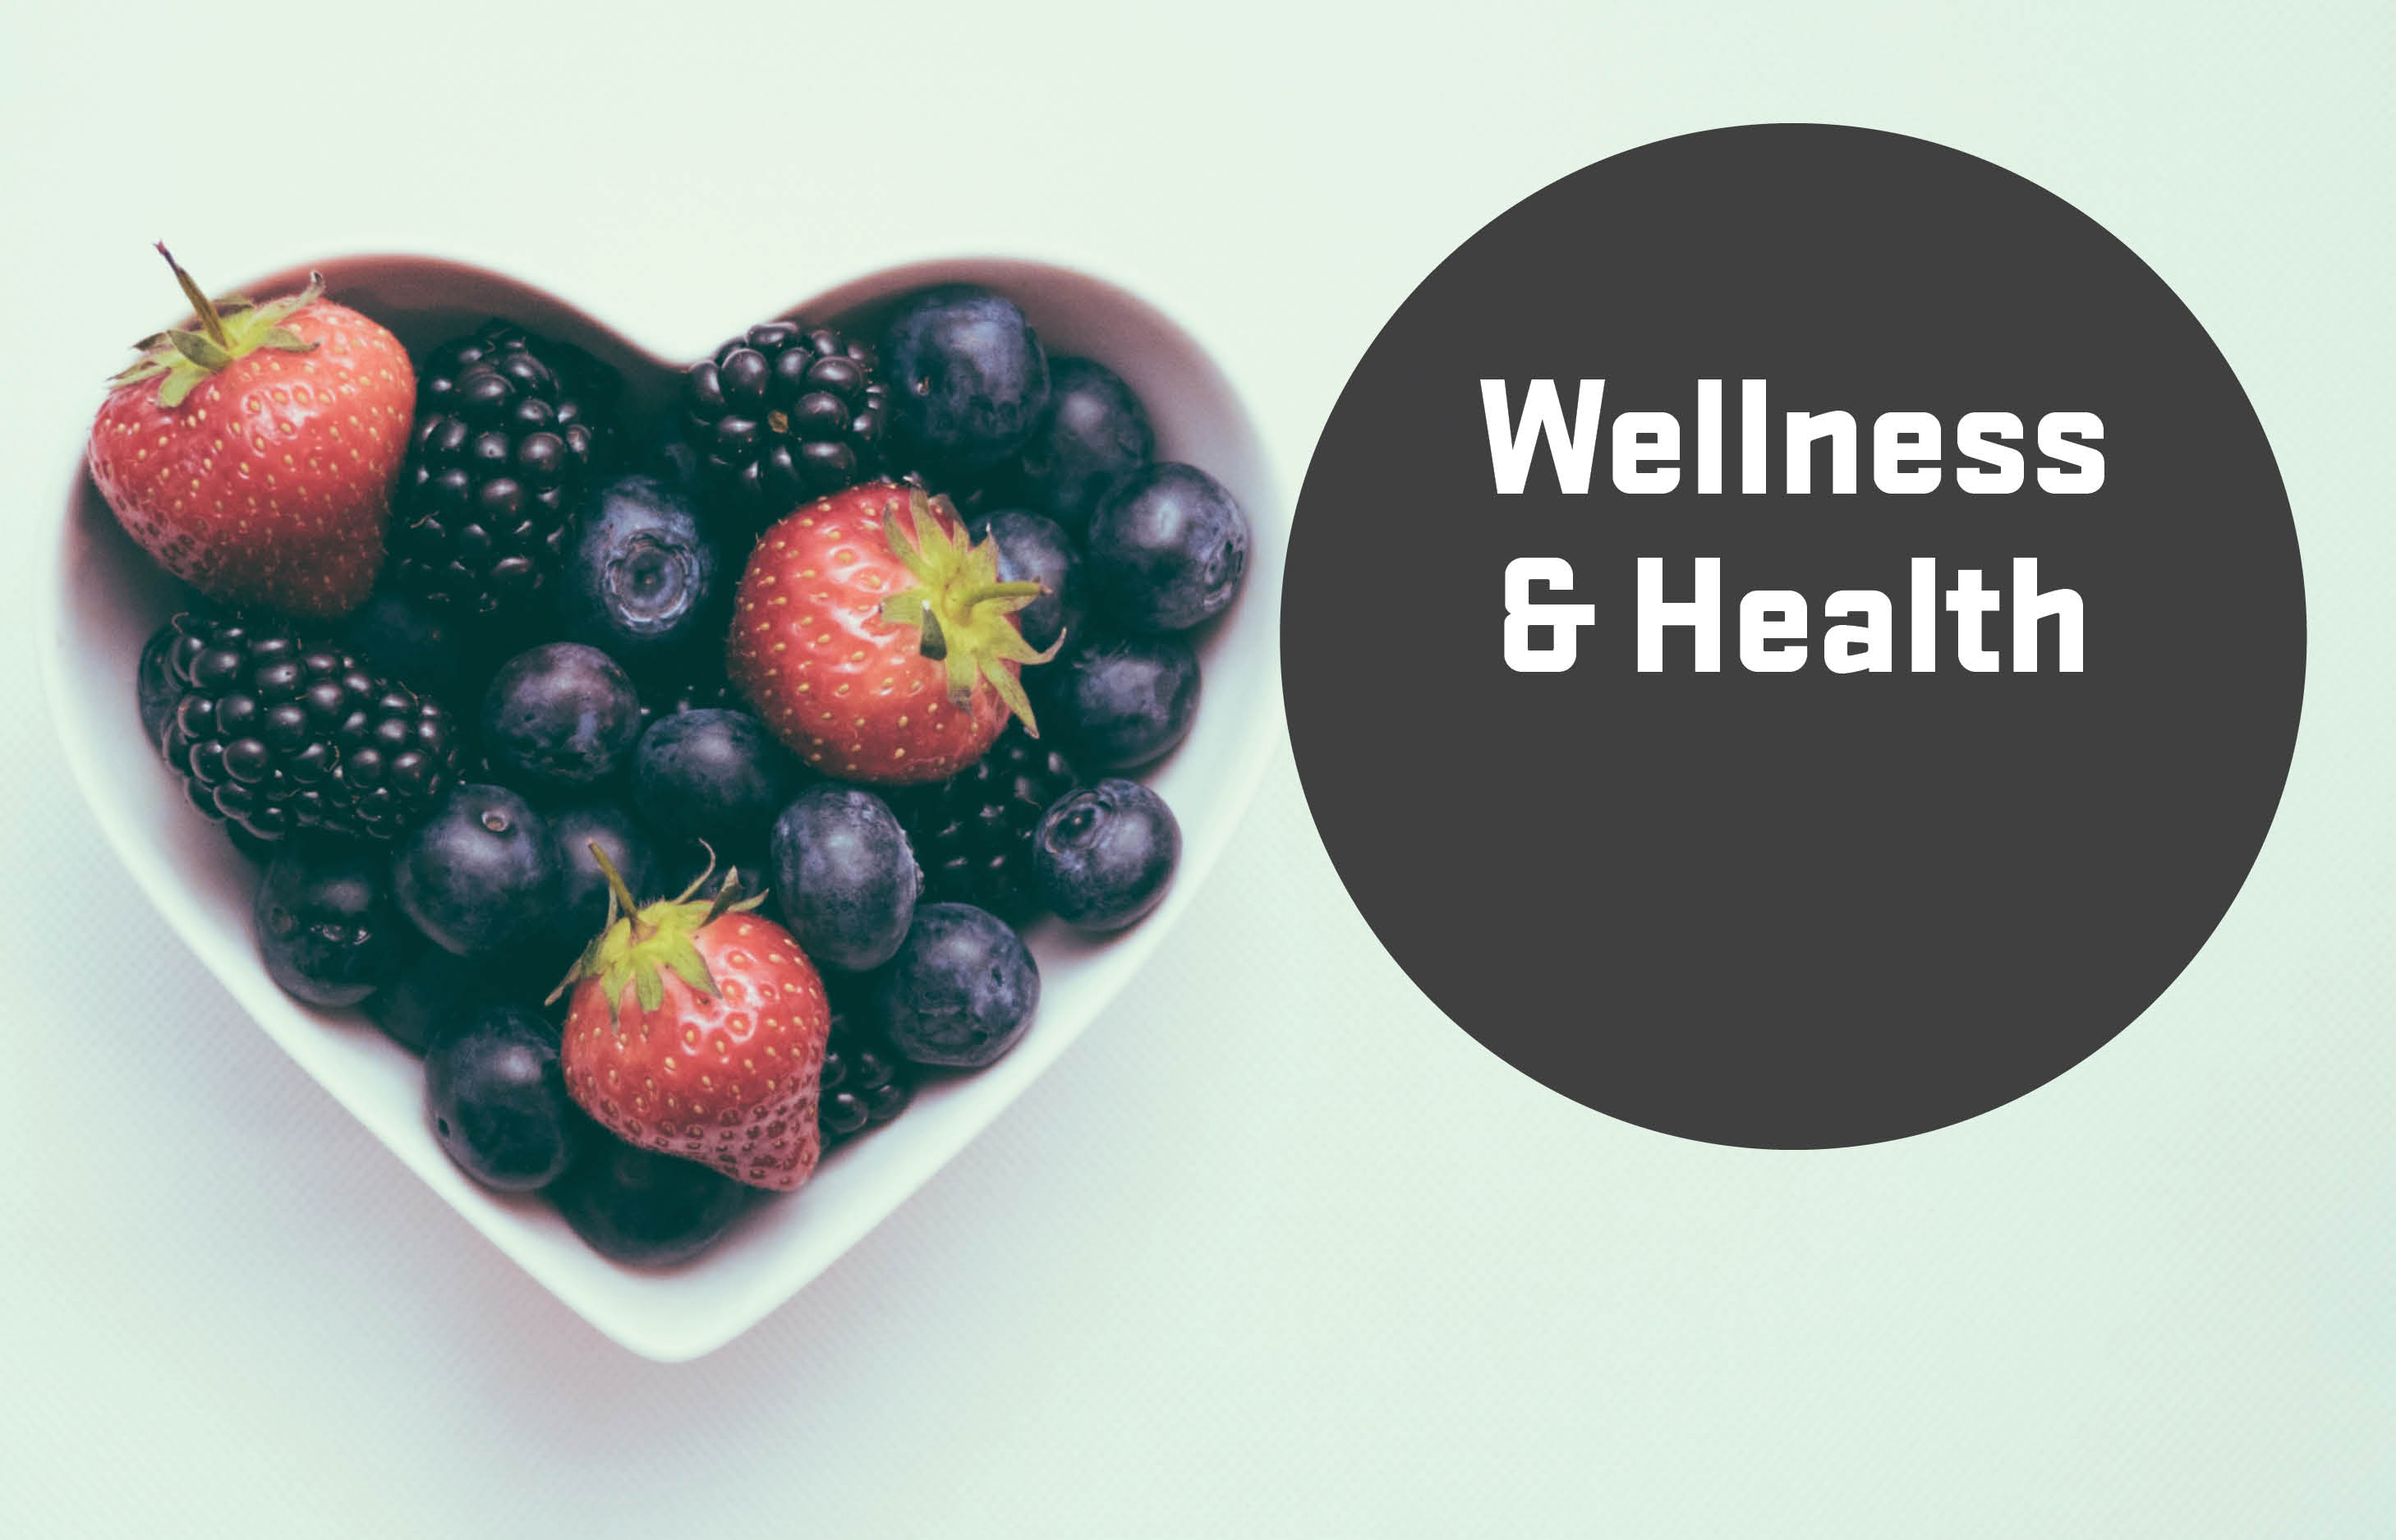 Wellness and health